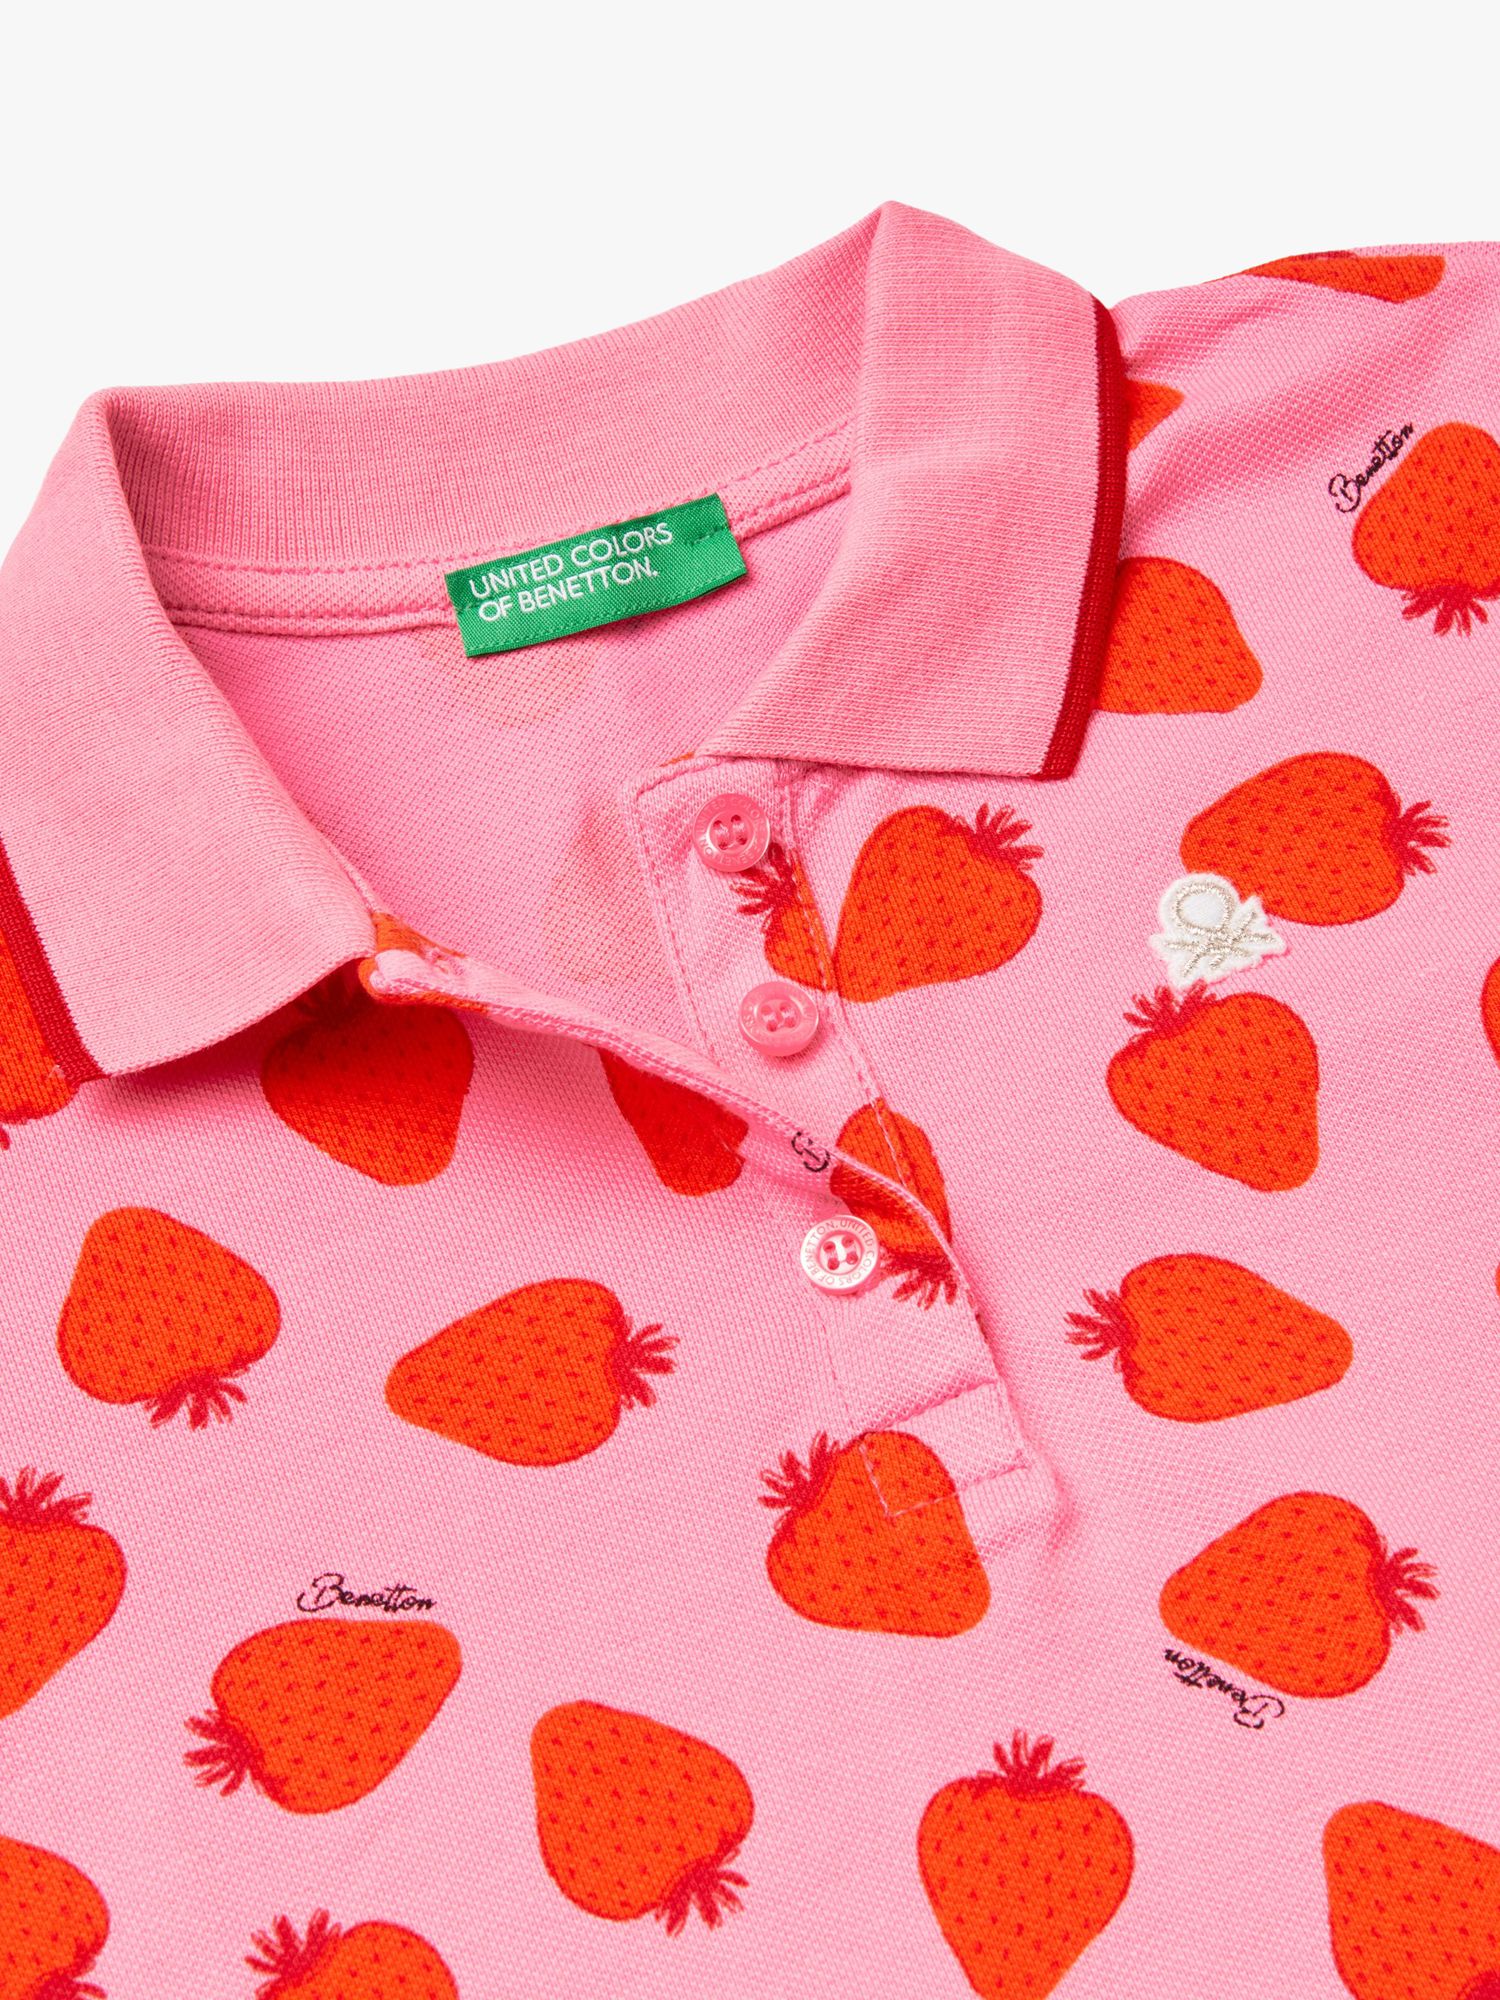 Benetton Kids' Short Sleeve Strawberry Polo Shirt, Multicolor, 3-4 years